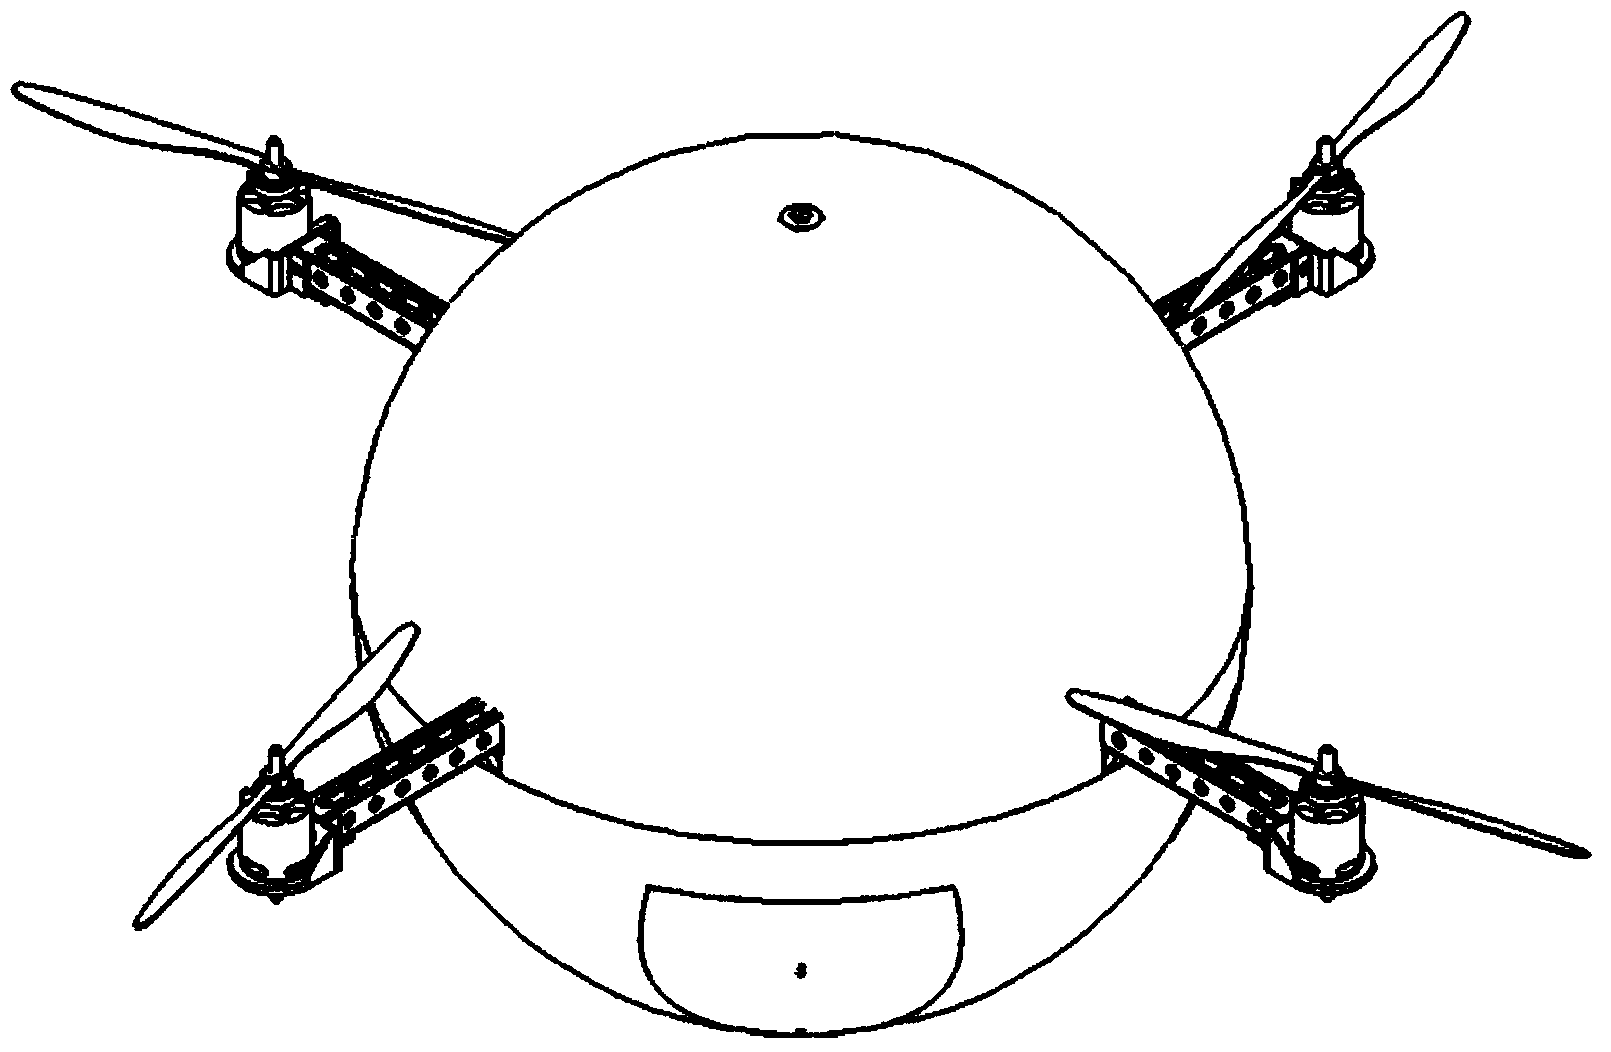 Air-ground amphibious spherical metamorphic robot based on metamorphic principle